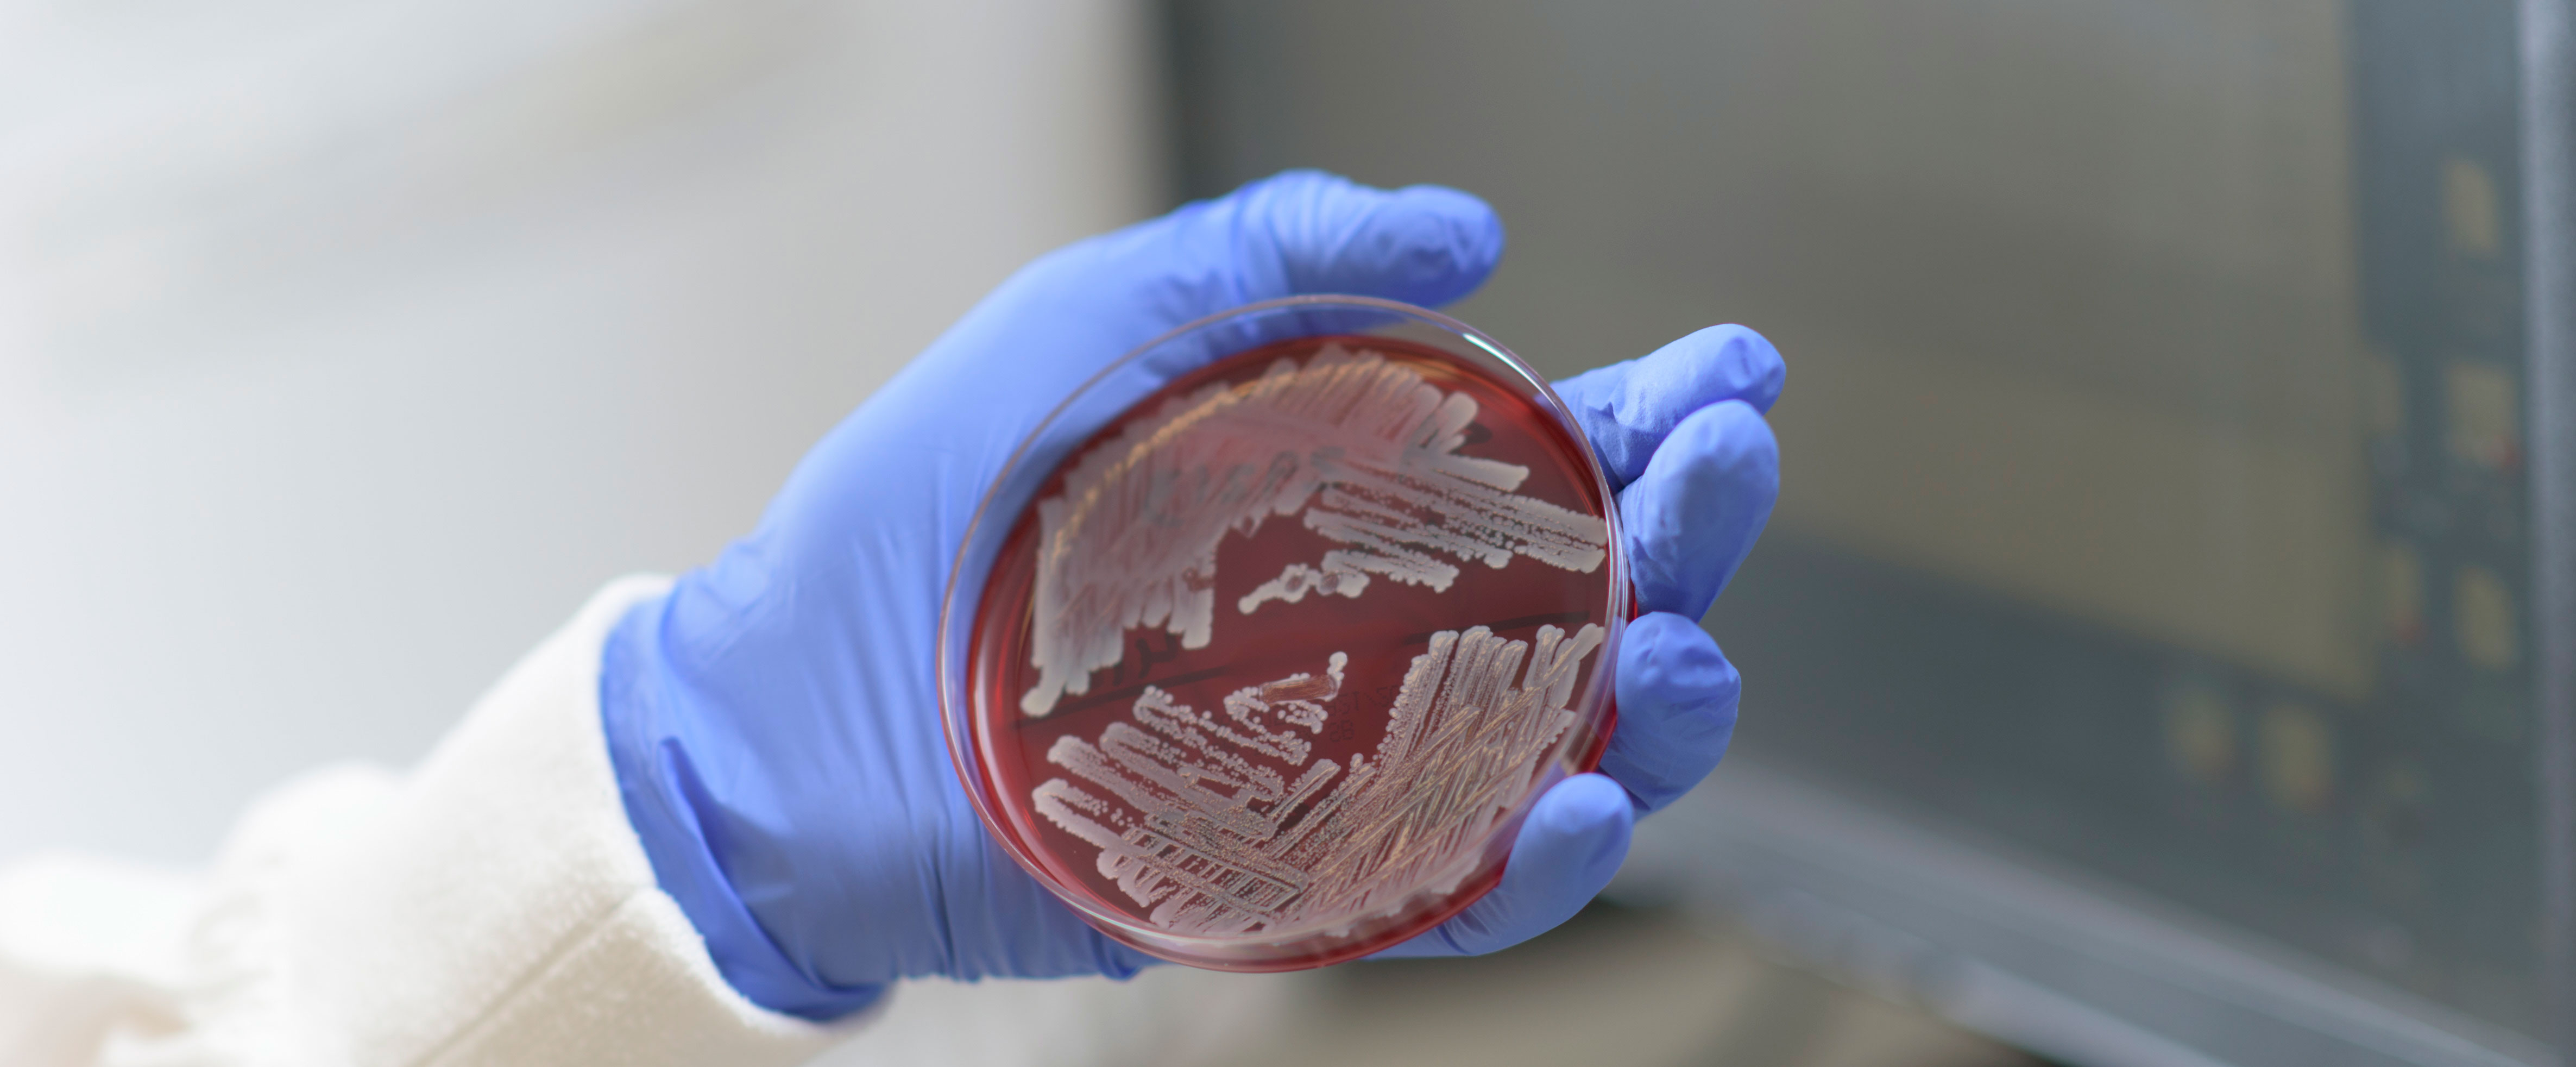 petri dish with bacteria